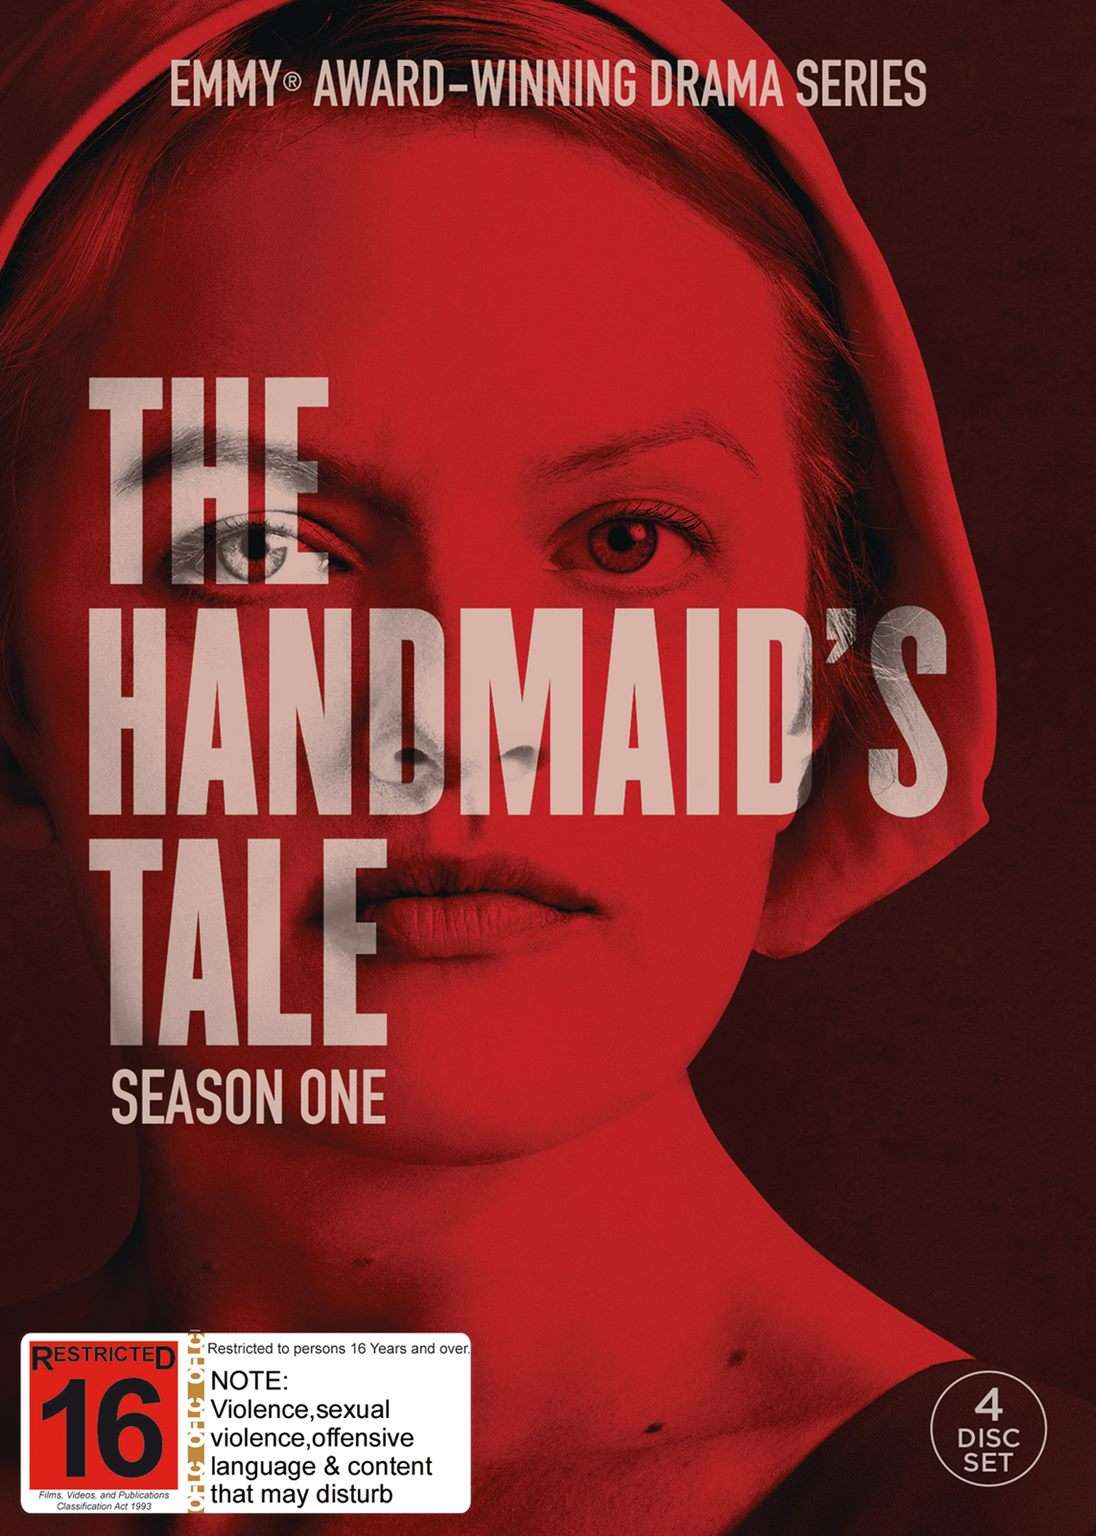 The Handmaid's Tale Season One